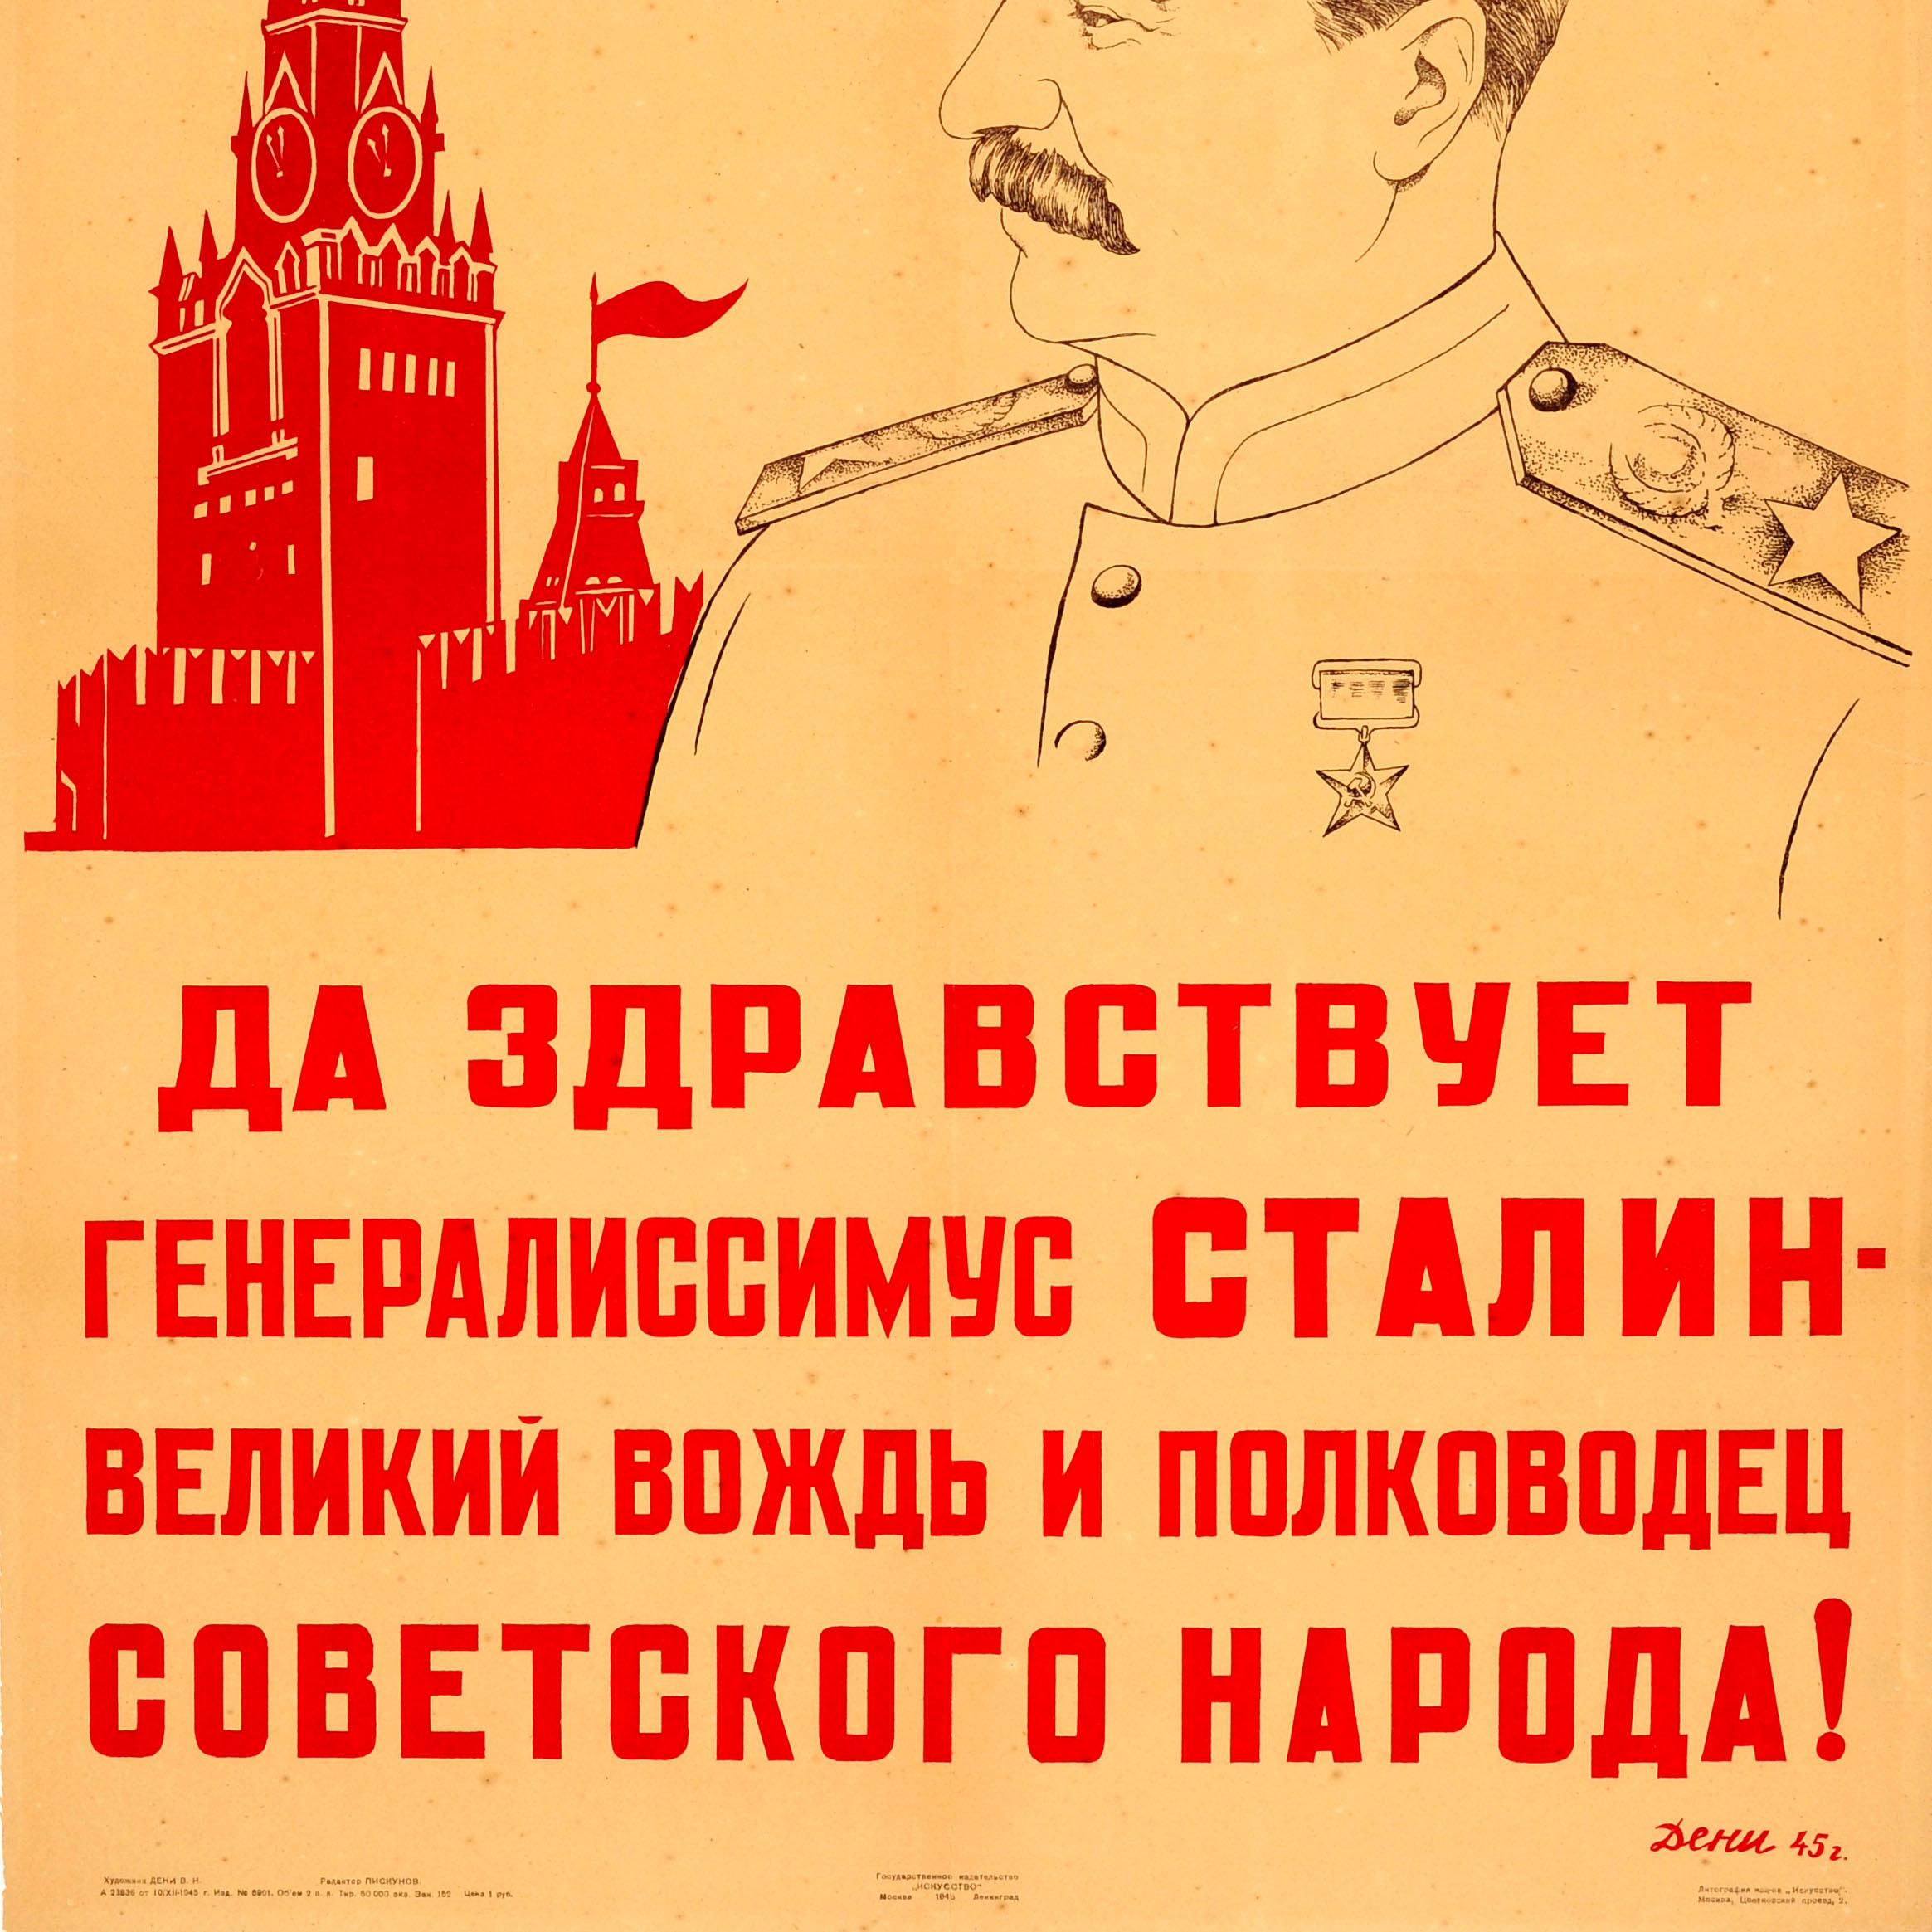 stalin poster ww2